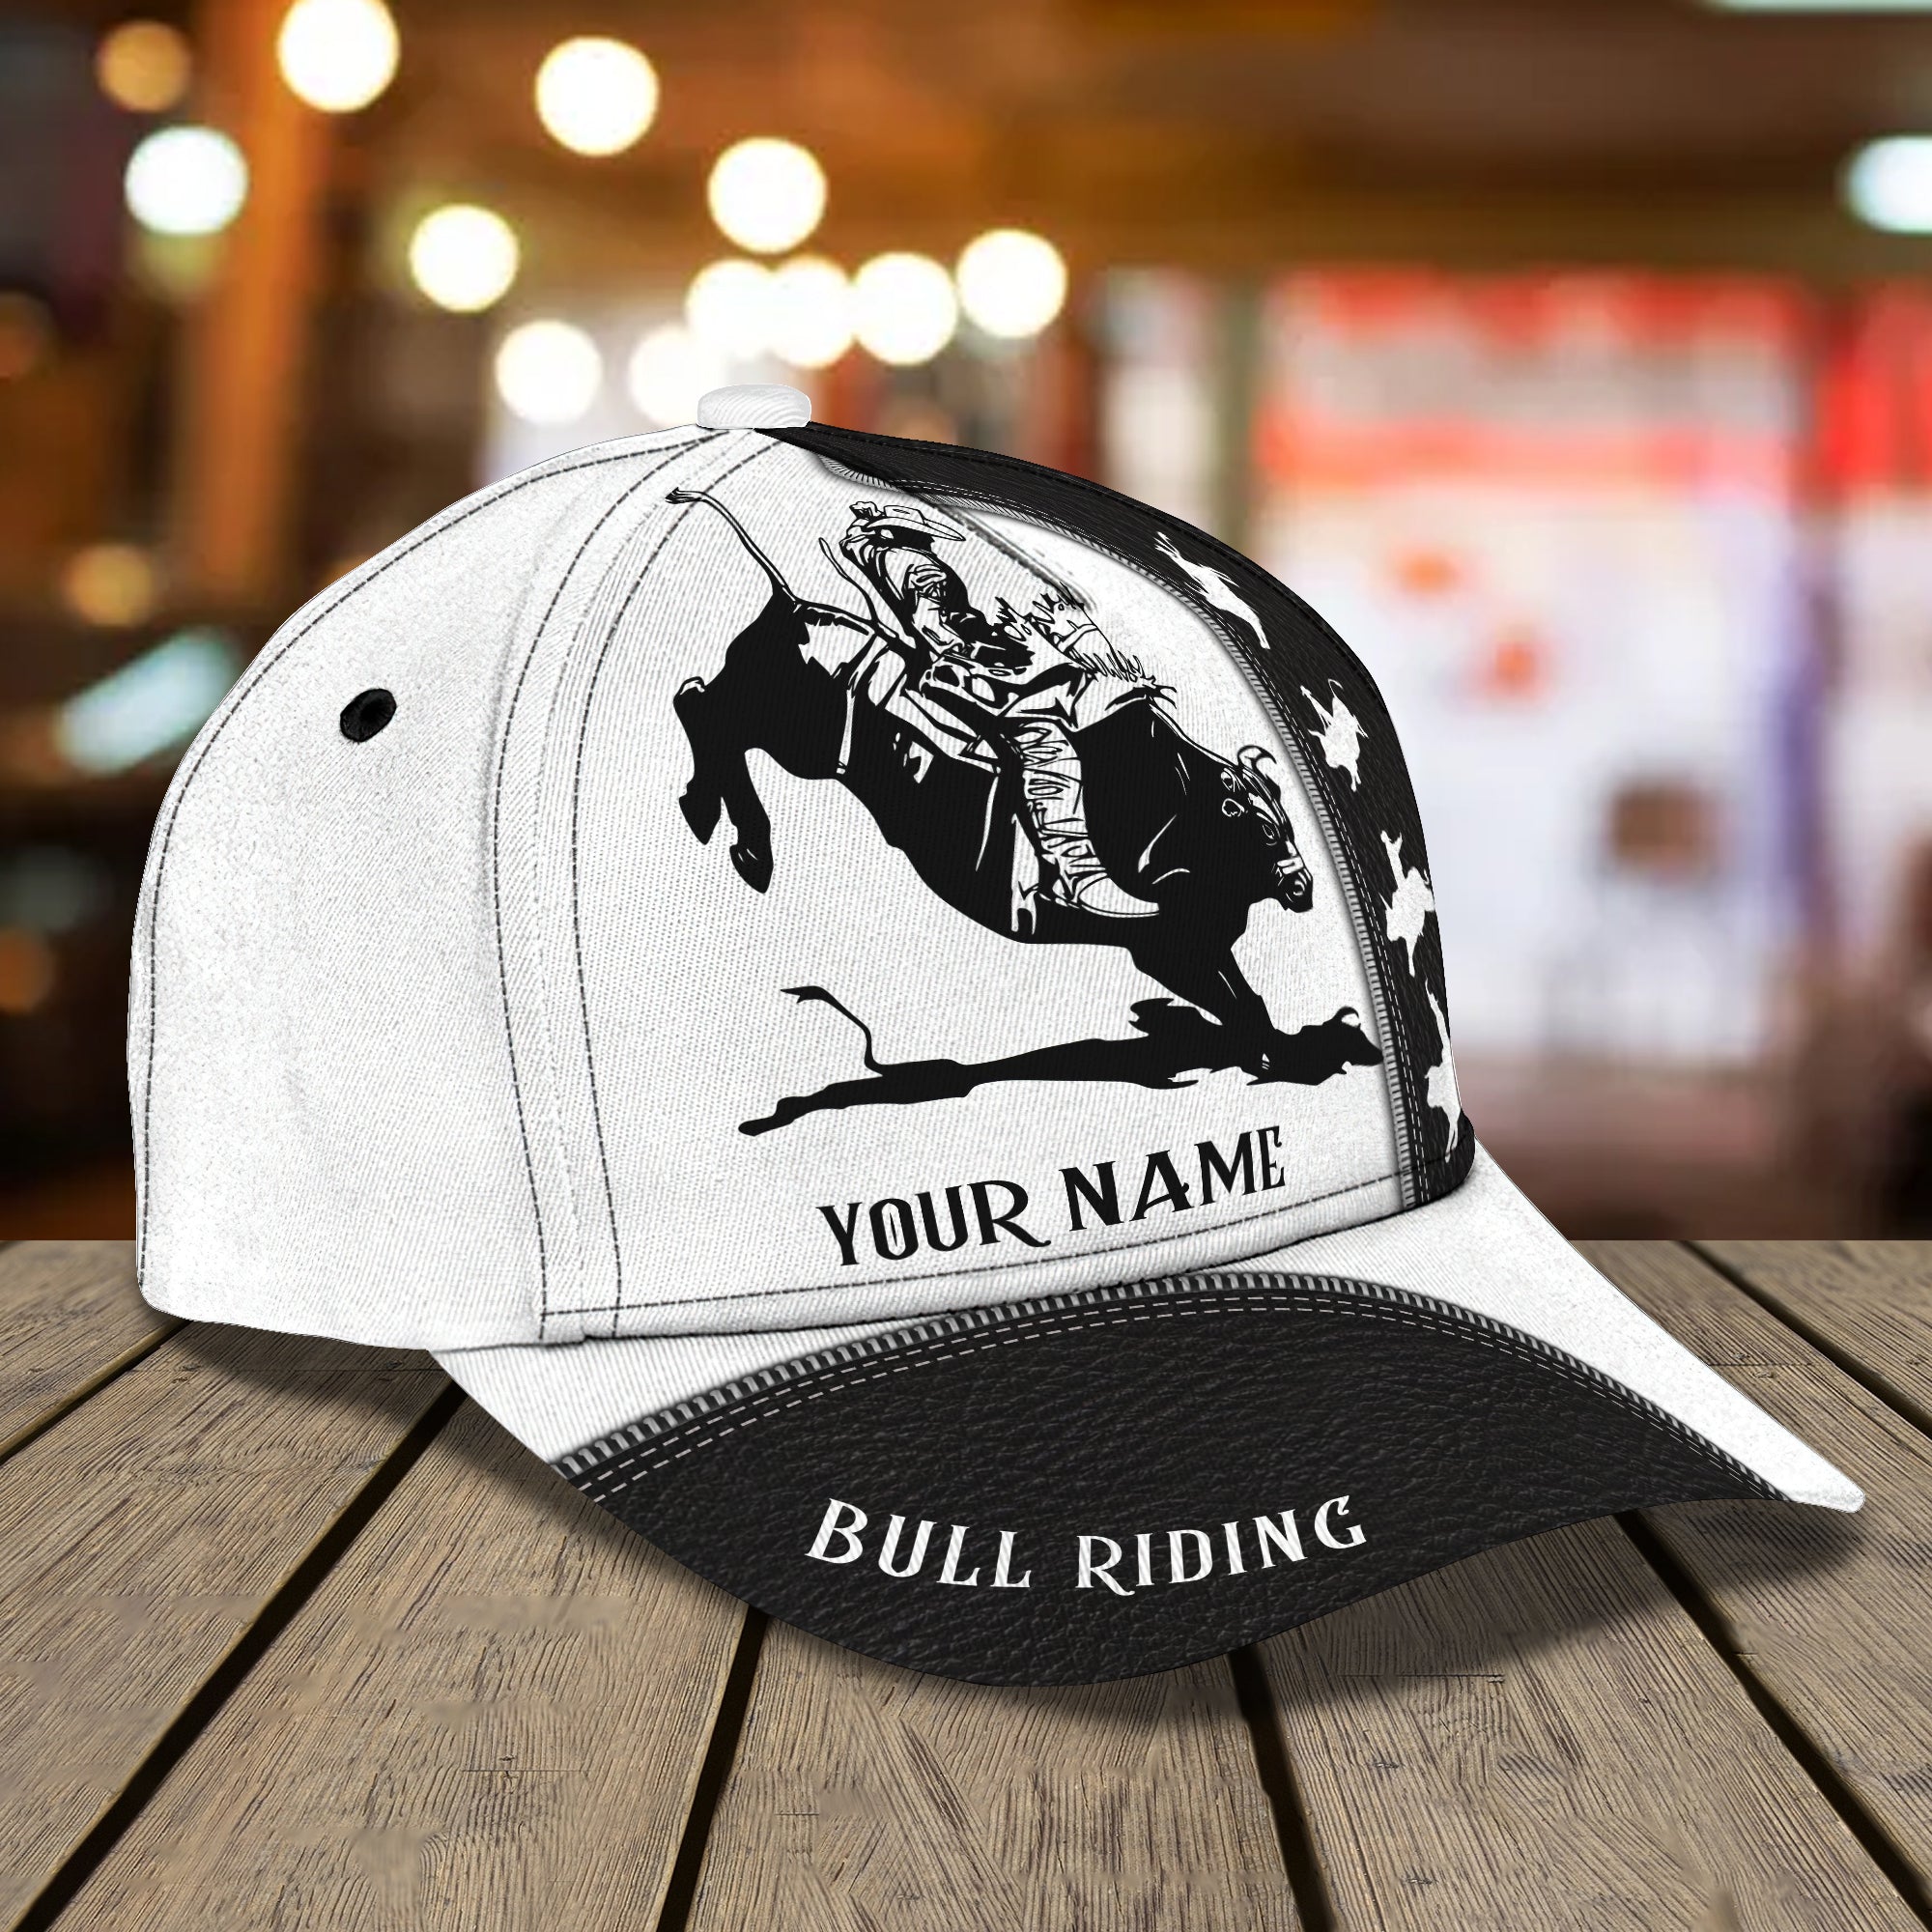 Bullriding - Personalized Name Cap - Urt96